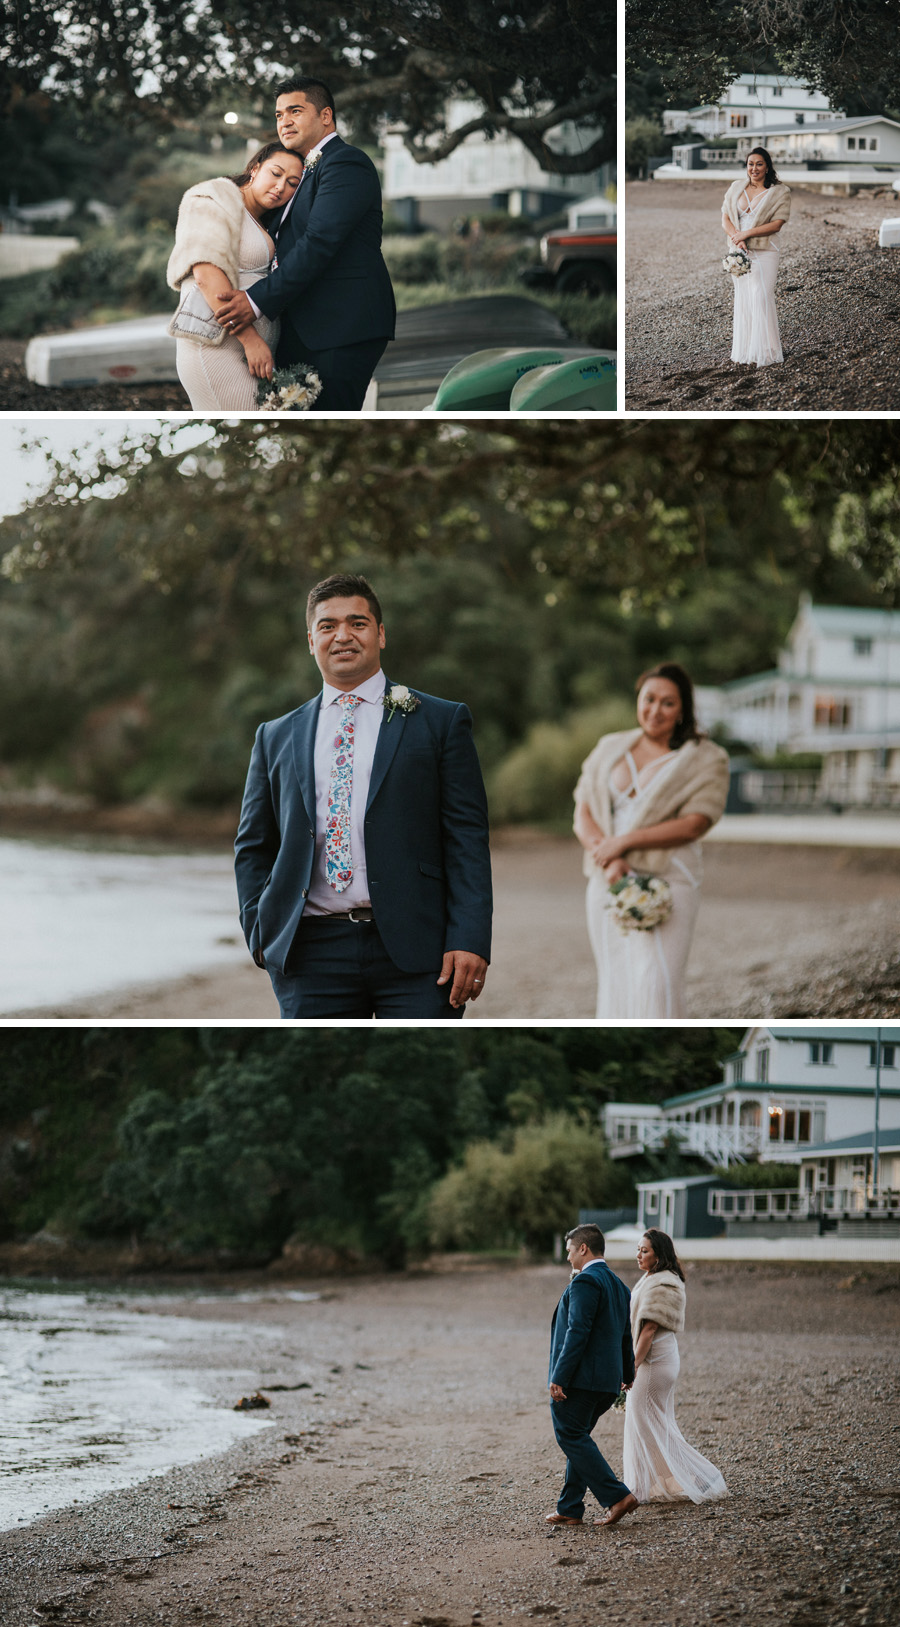 Northland New Zealand Wedding Photographer Jess Burges. Russell Wedding